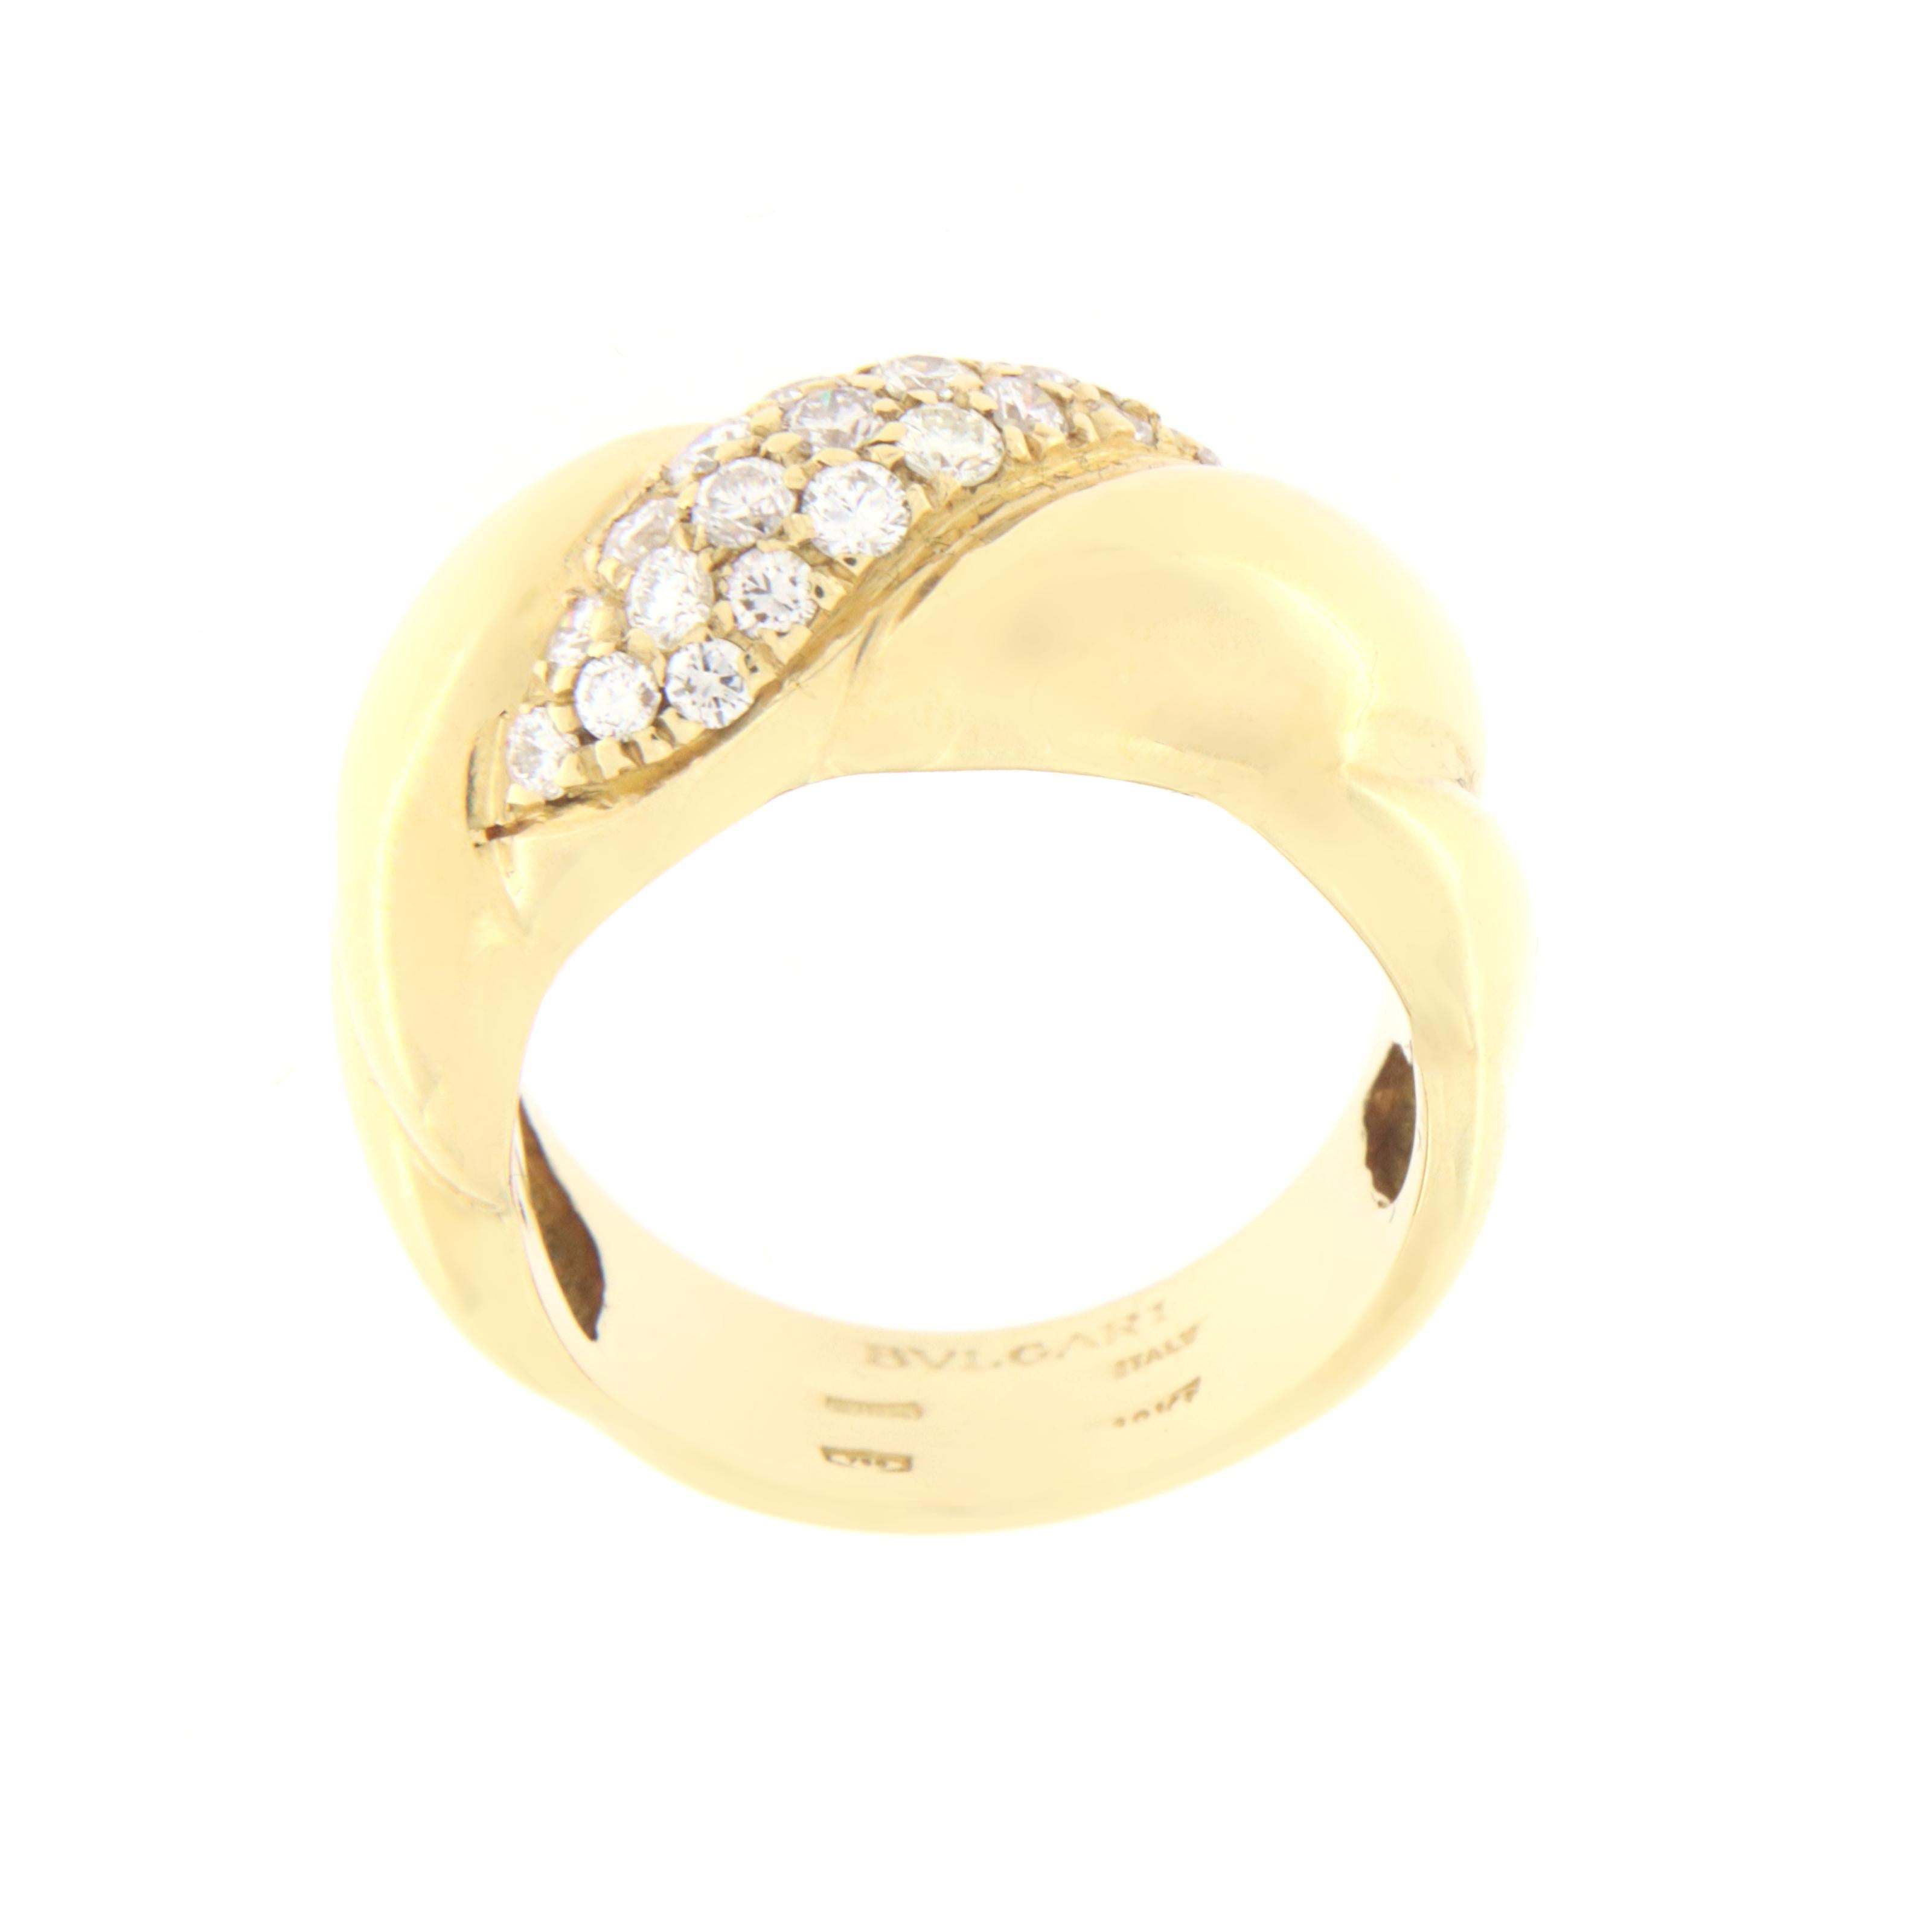 Spectacular ring Bulgari 18 karat yellow gold and diamonds

Ring total weight 15 grams
Diamonds total weight 0.76 karat
Ring size 14 ITA 7 US
(all rings are can be resized)

